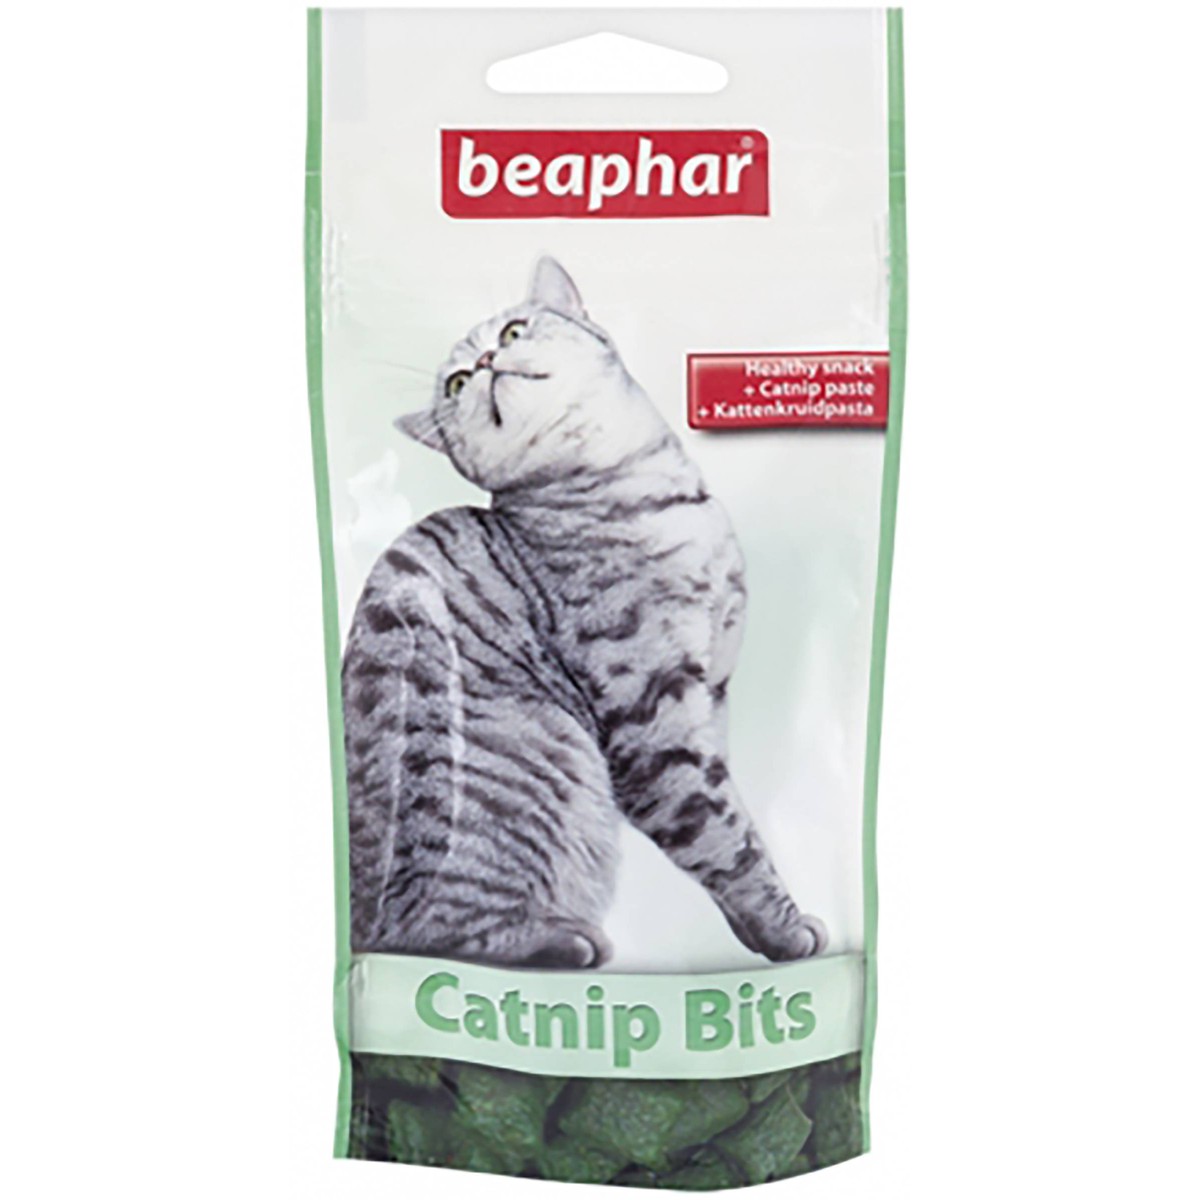   Catnips Bits pour chats 35 g  35g